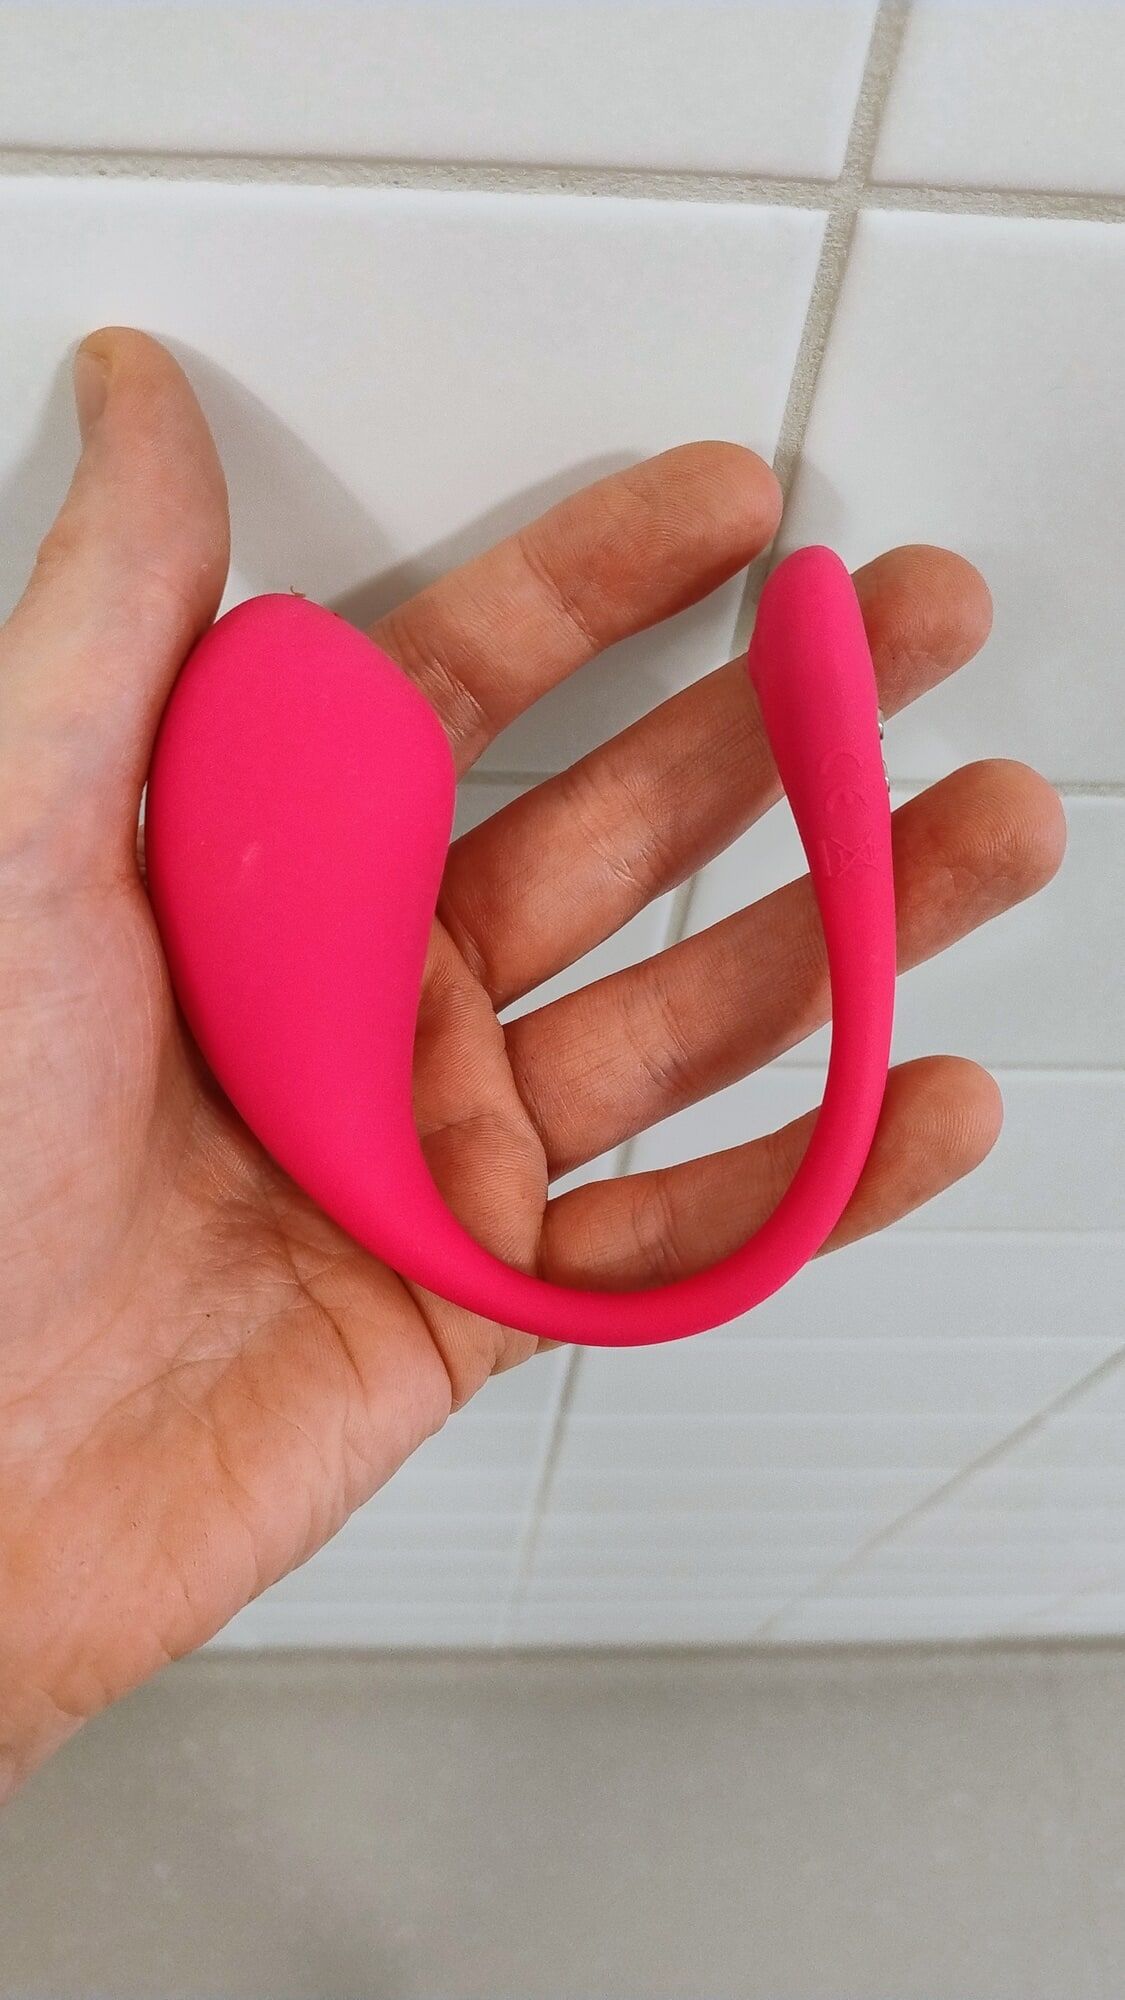 Lush 3 my new sex toy #Lush3 #lovense